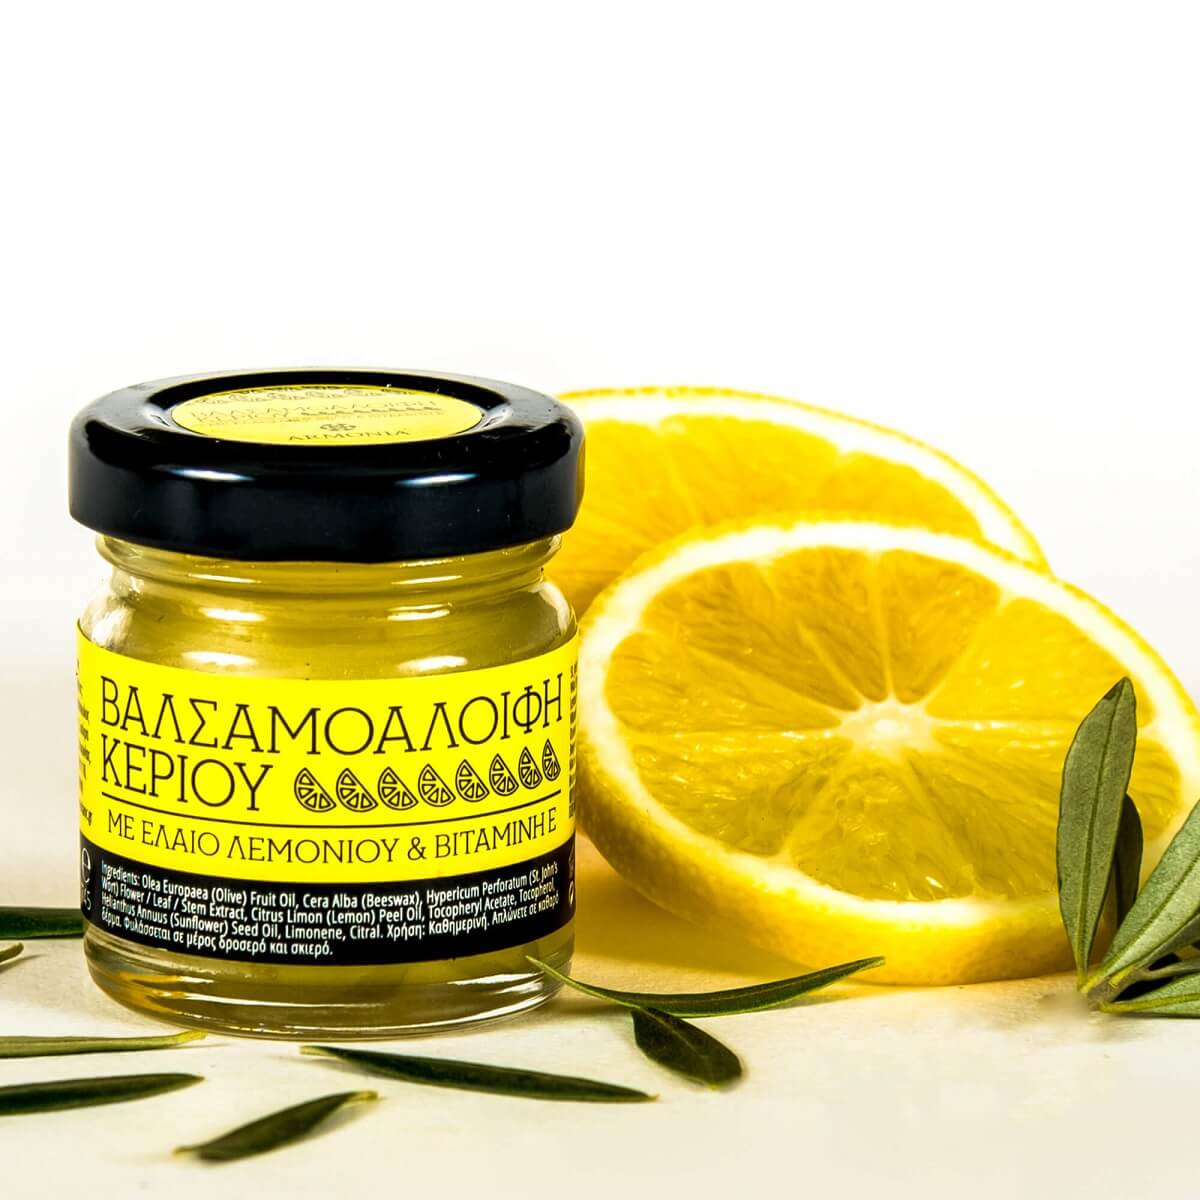 St. John’s wort oil wax cream lemon oil vitamin E natural cosmetics 100 made in Greece parabens free sls